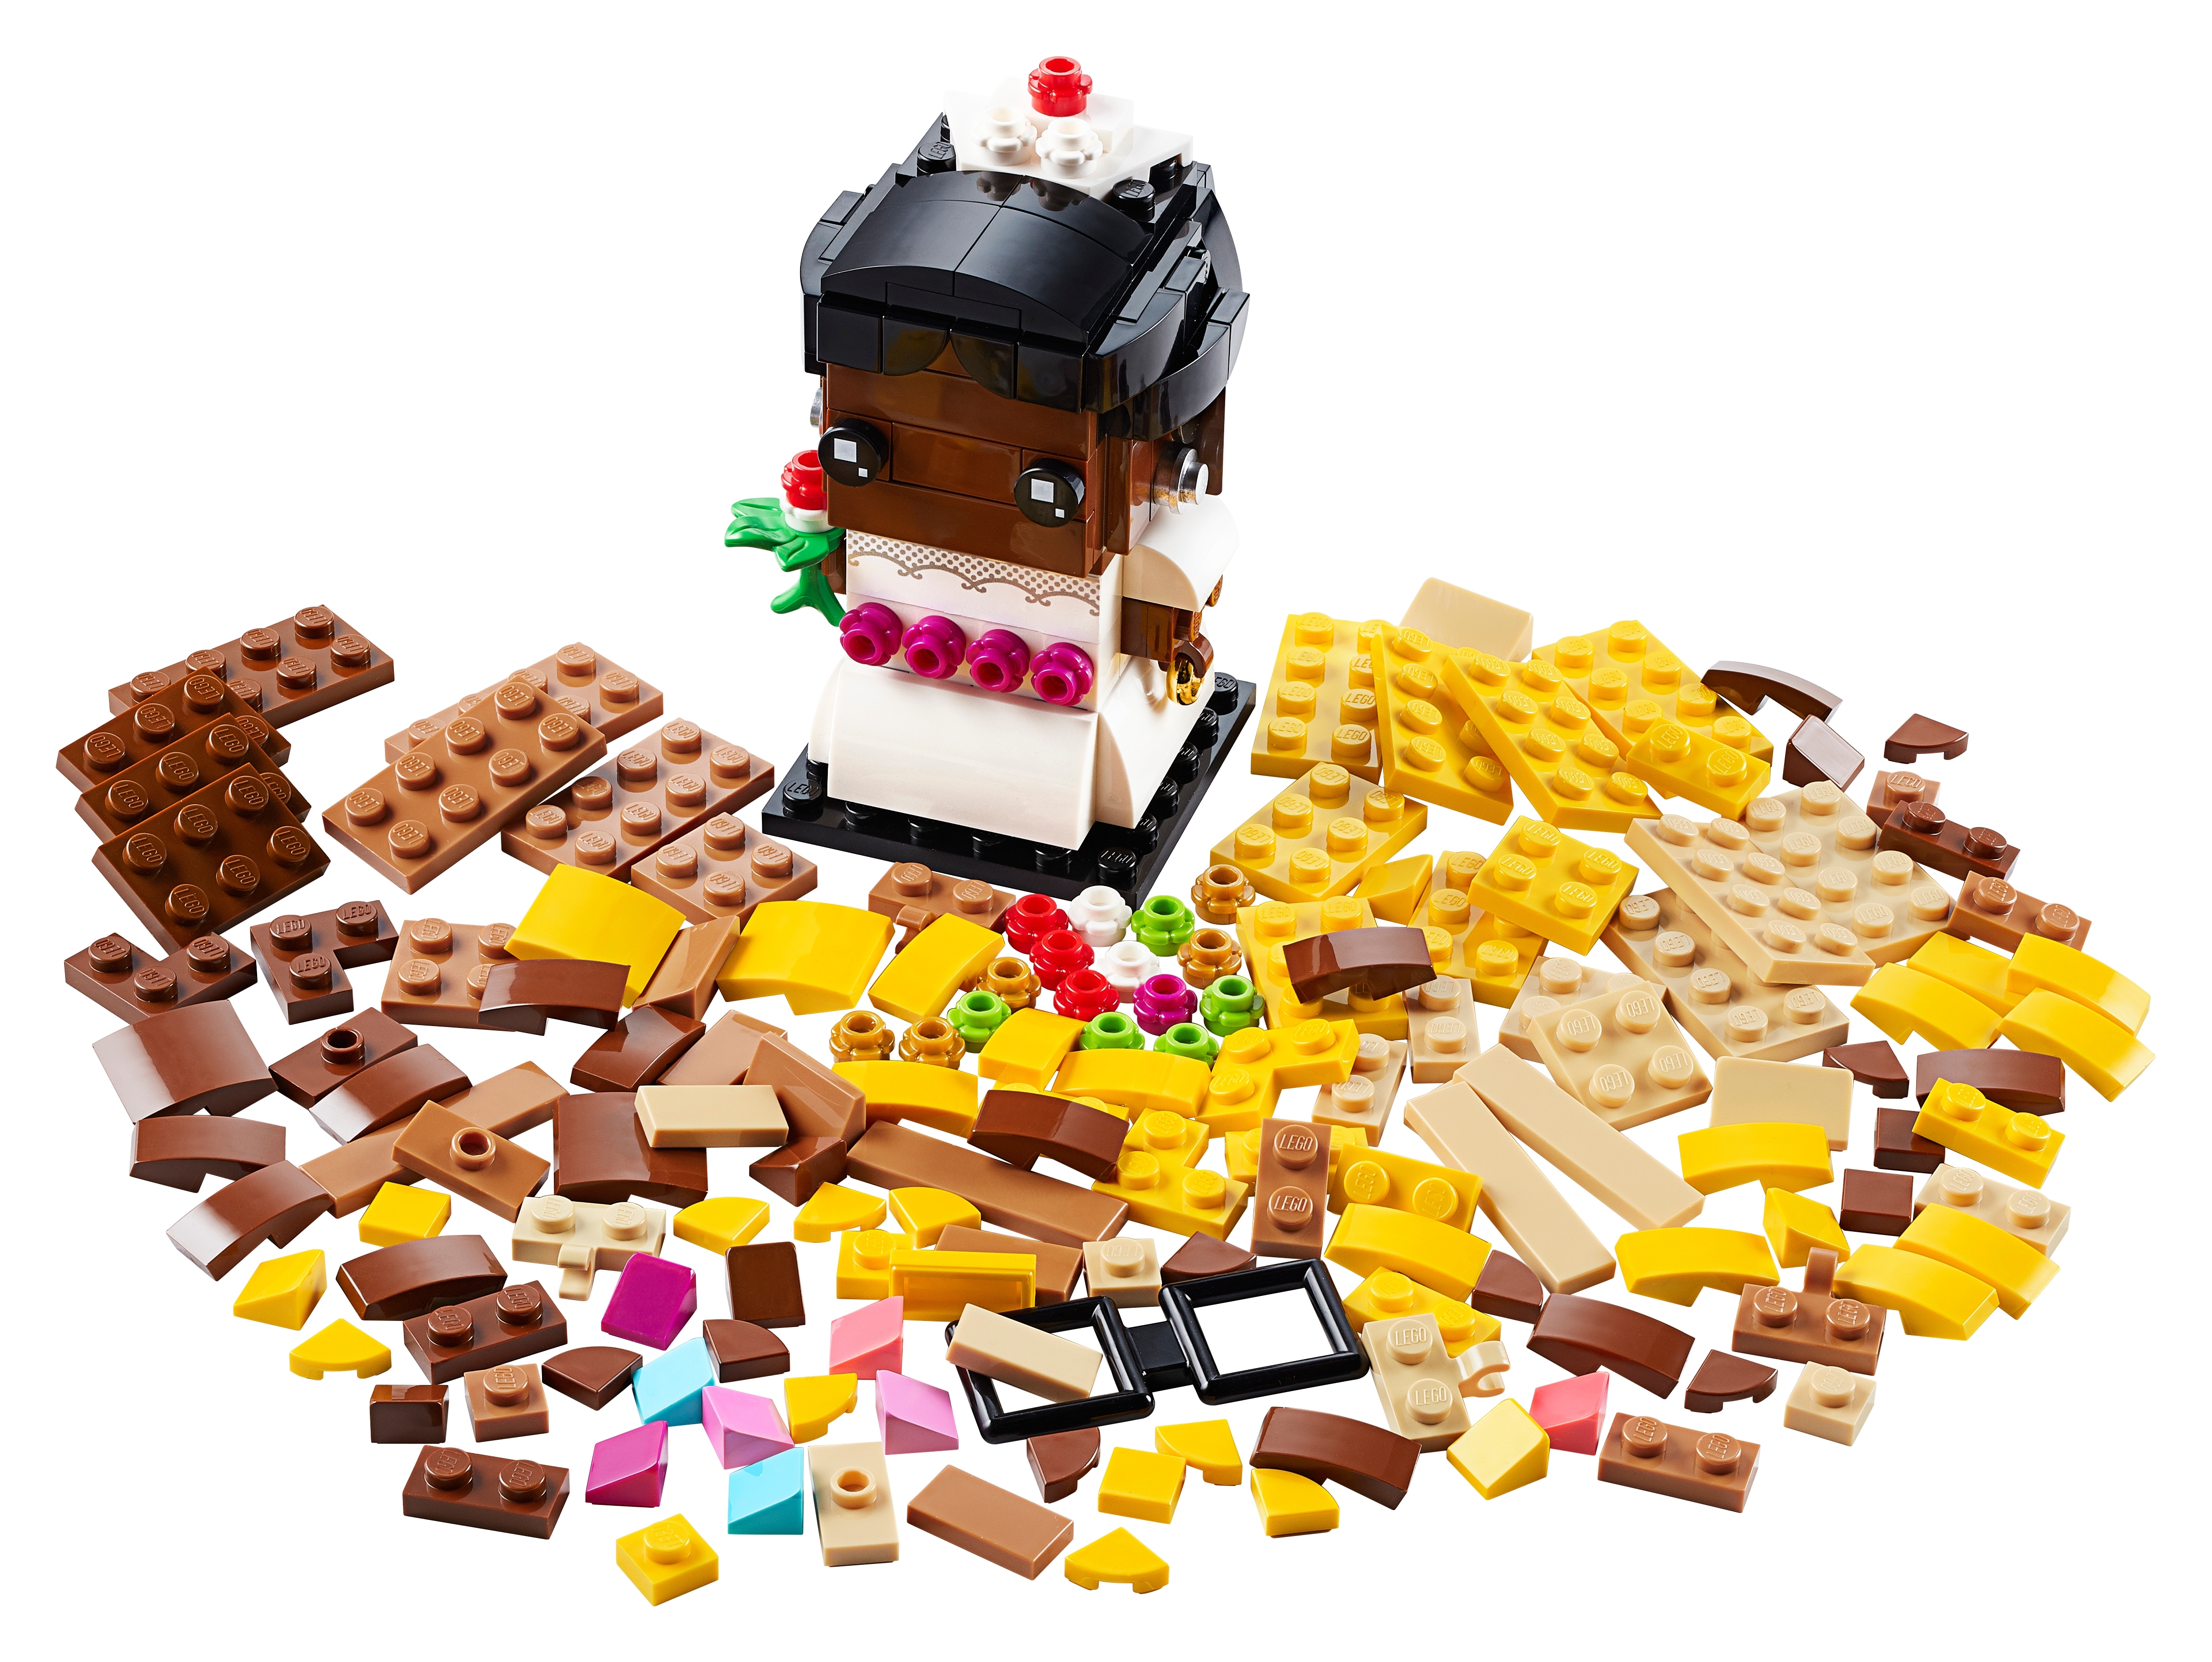 Brickheadz Themes Official Lego Shop Gb